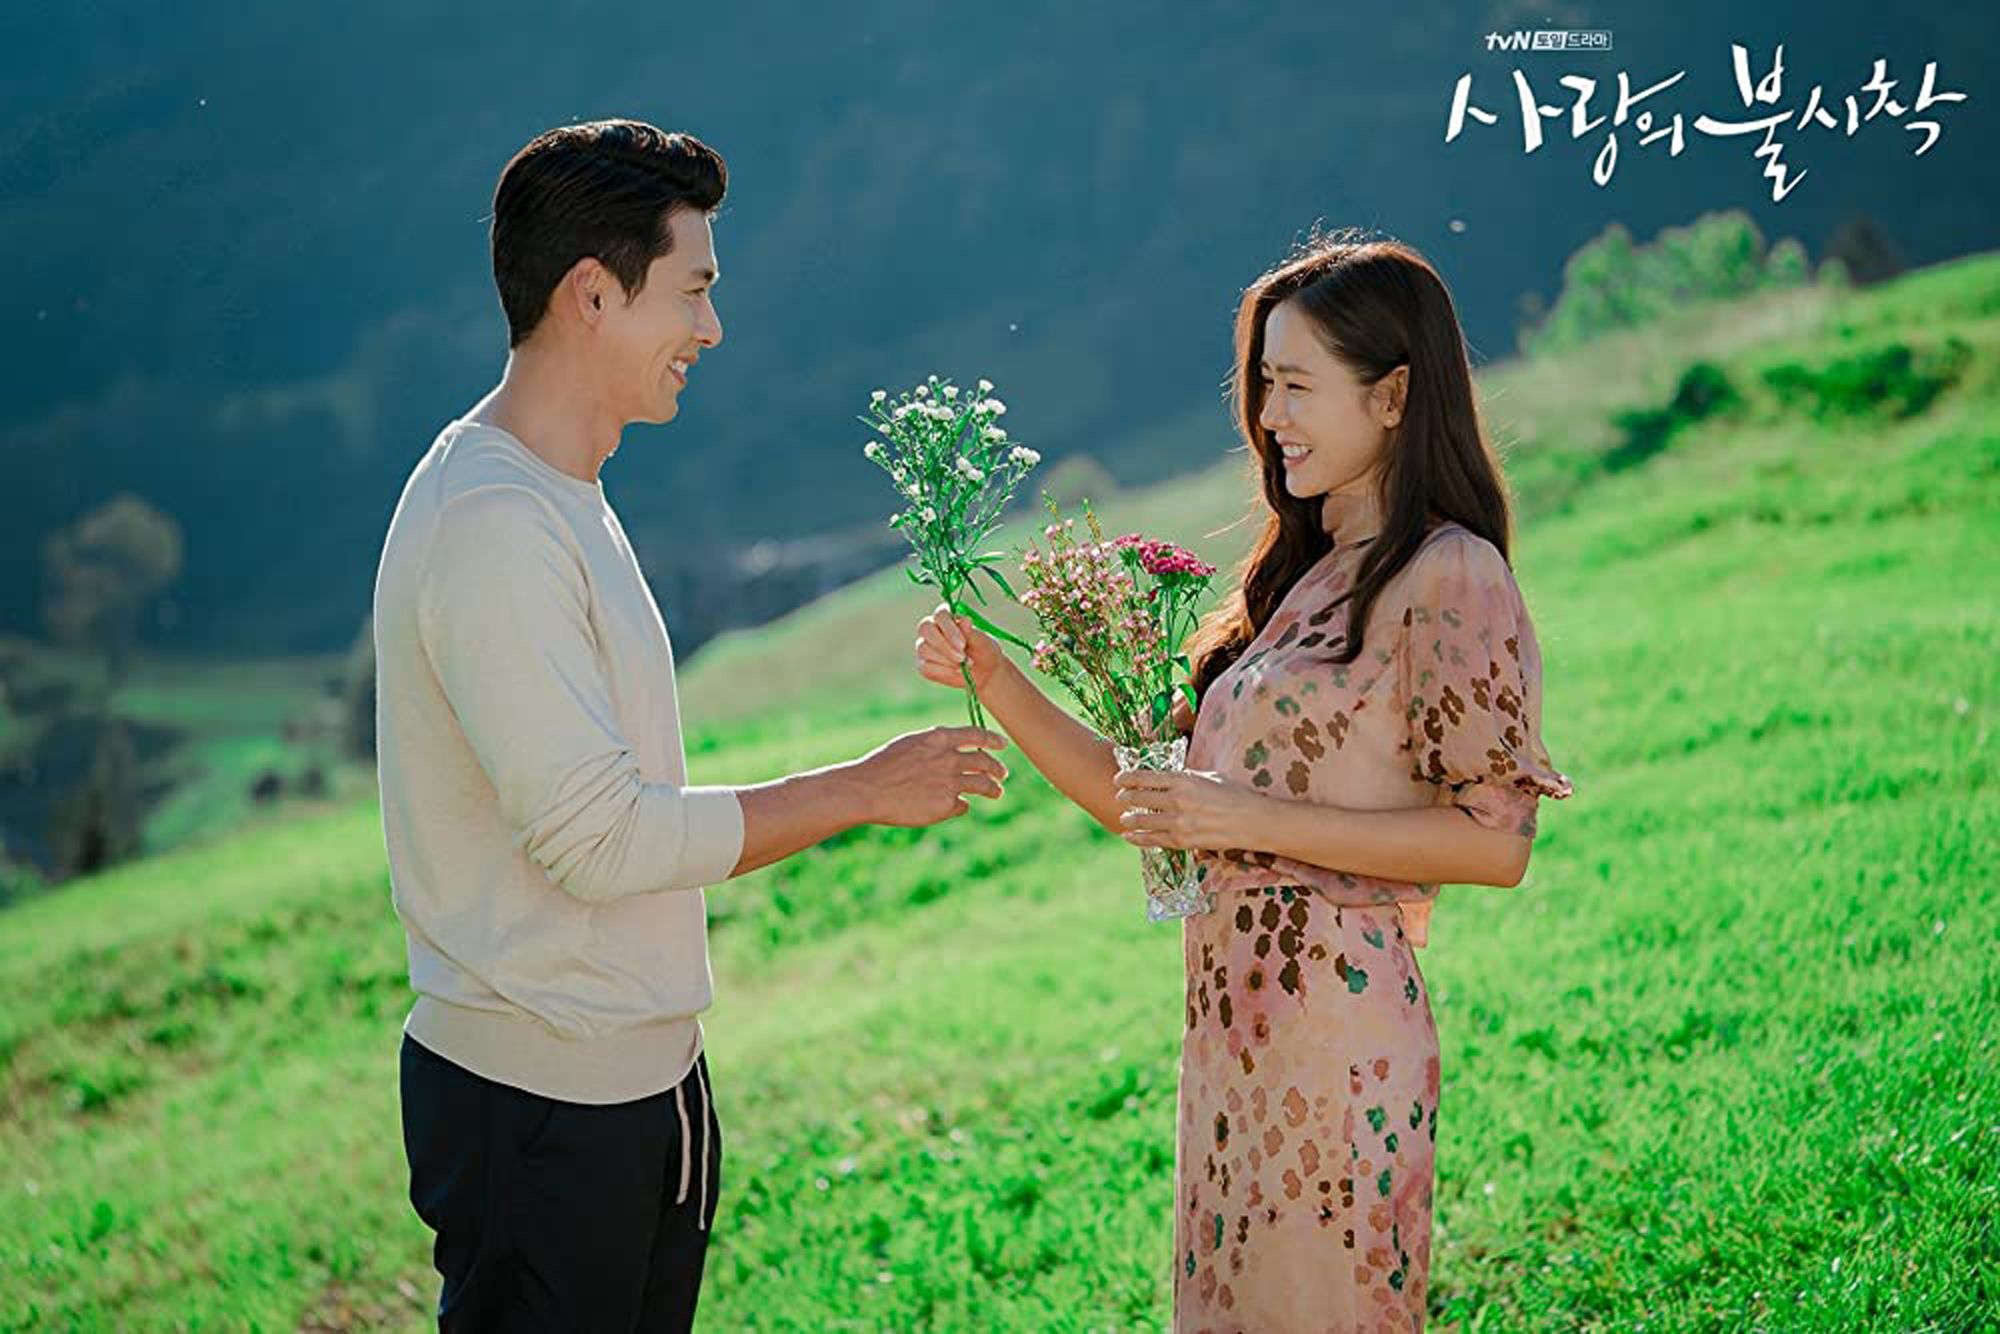 Crash Landing On You' stars Hyun Bin and Son Ye-Jin get married